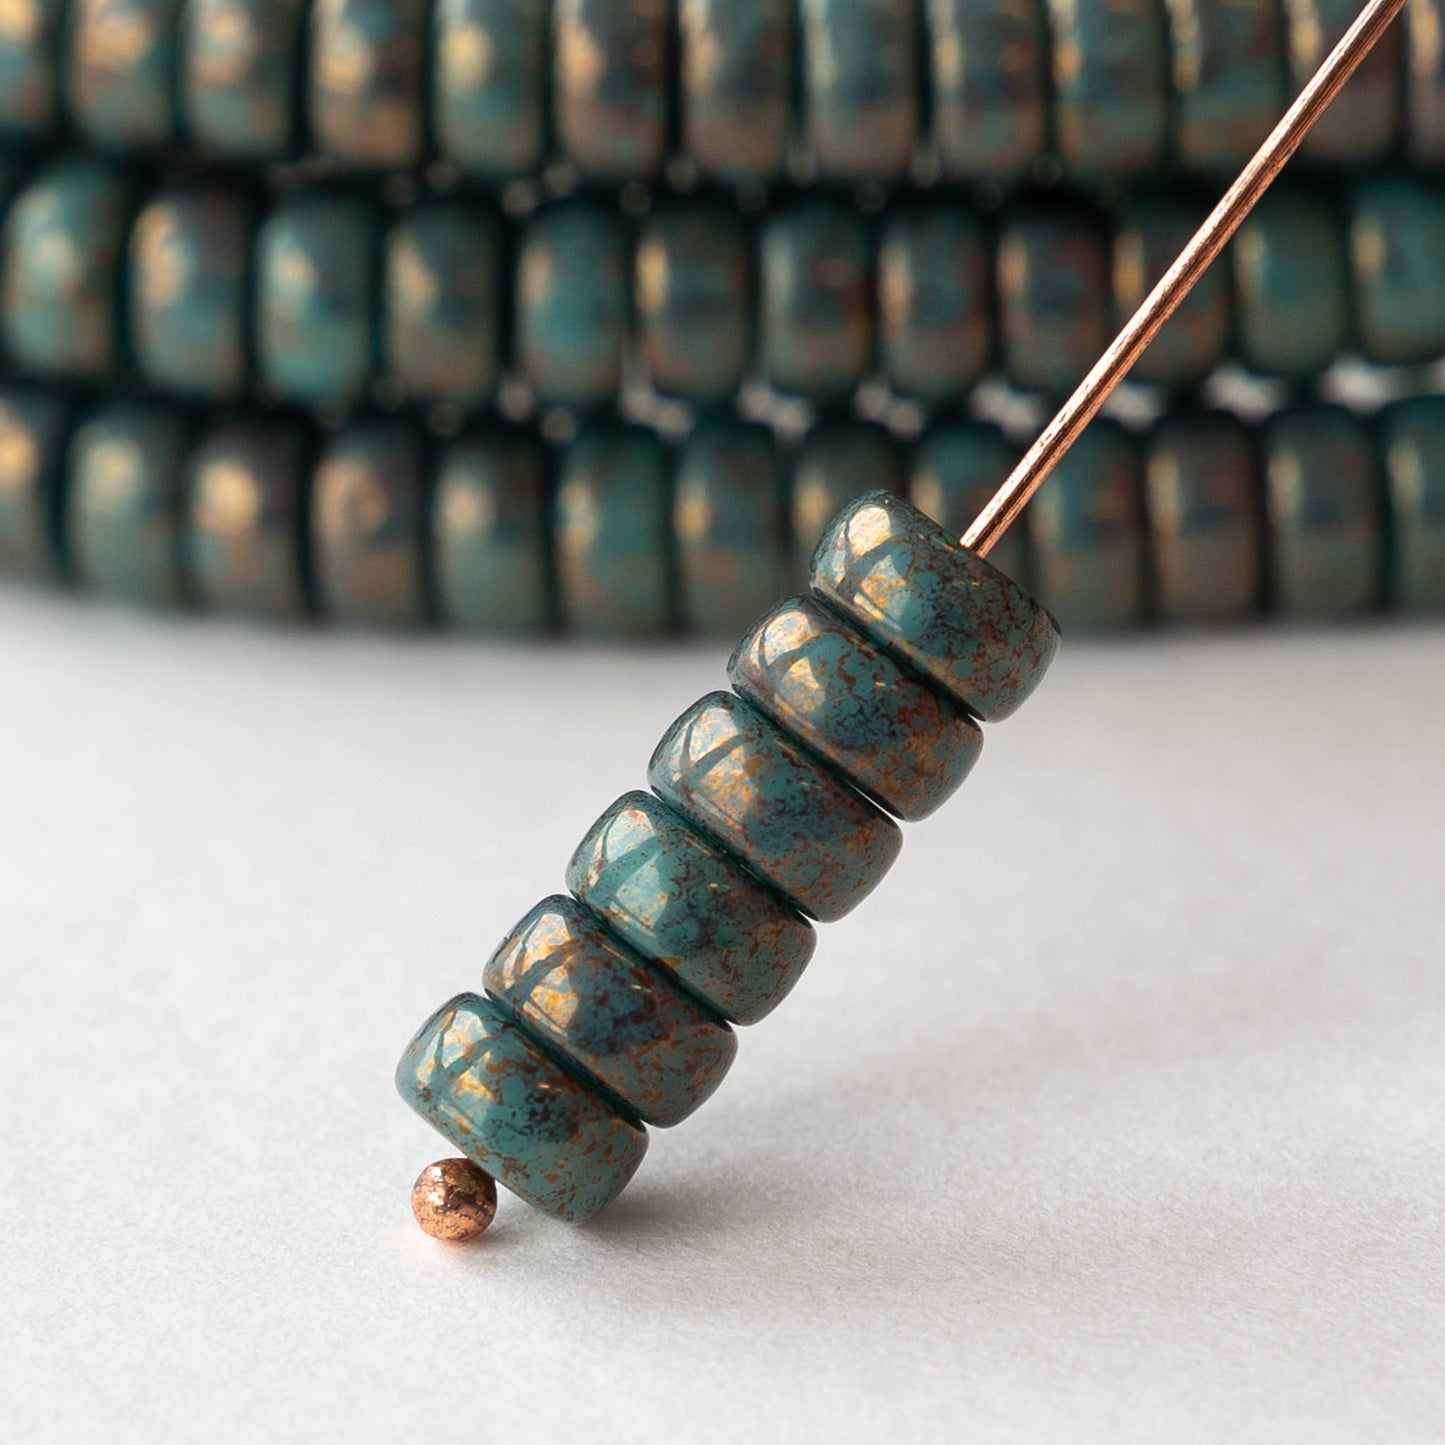 6mm Glass Heishi Beads - Turquoise Bronze - 25 Beads